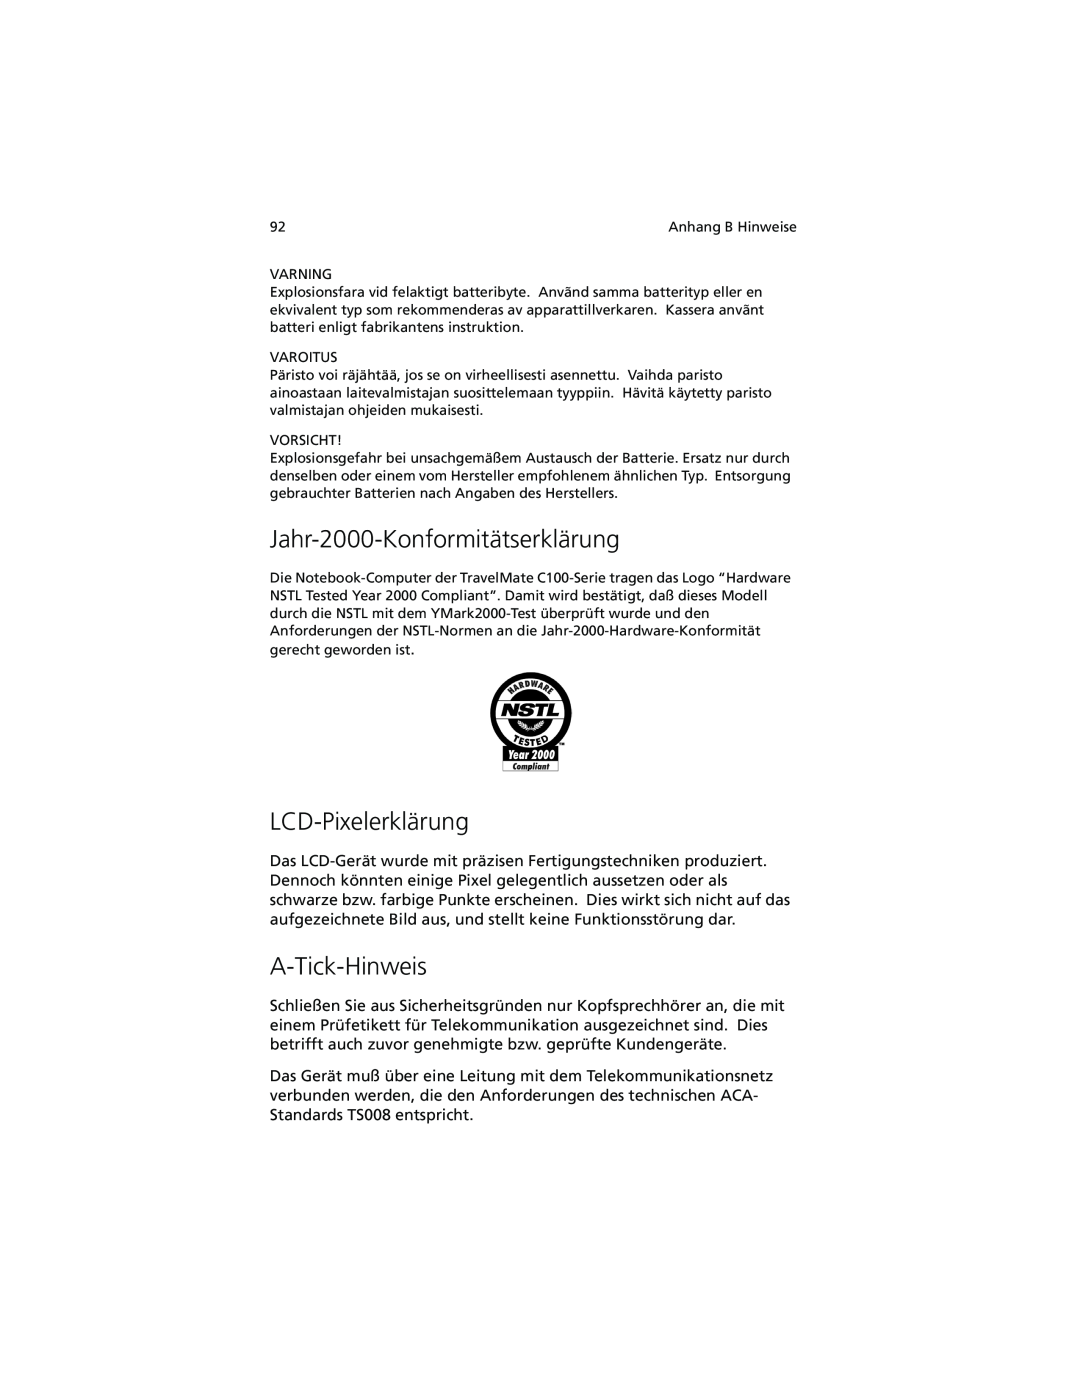 Acer C100-Series manual Jahr-2000-Konformitätserklärung, LCD-Pixelerklärung, A-Tick-Hinweis 